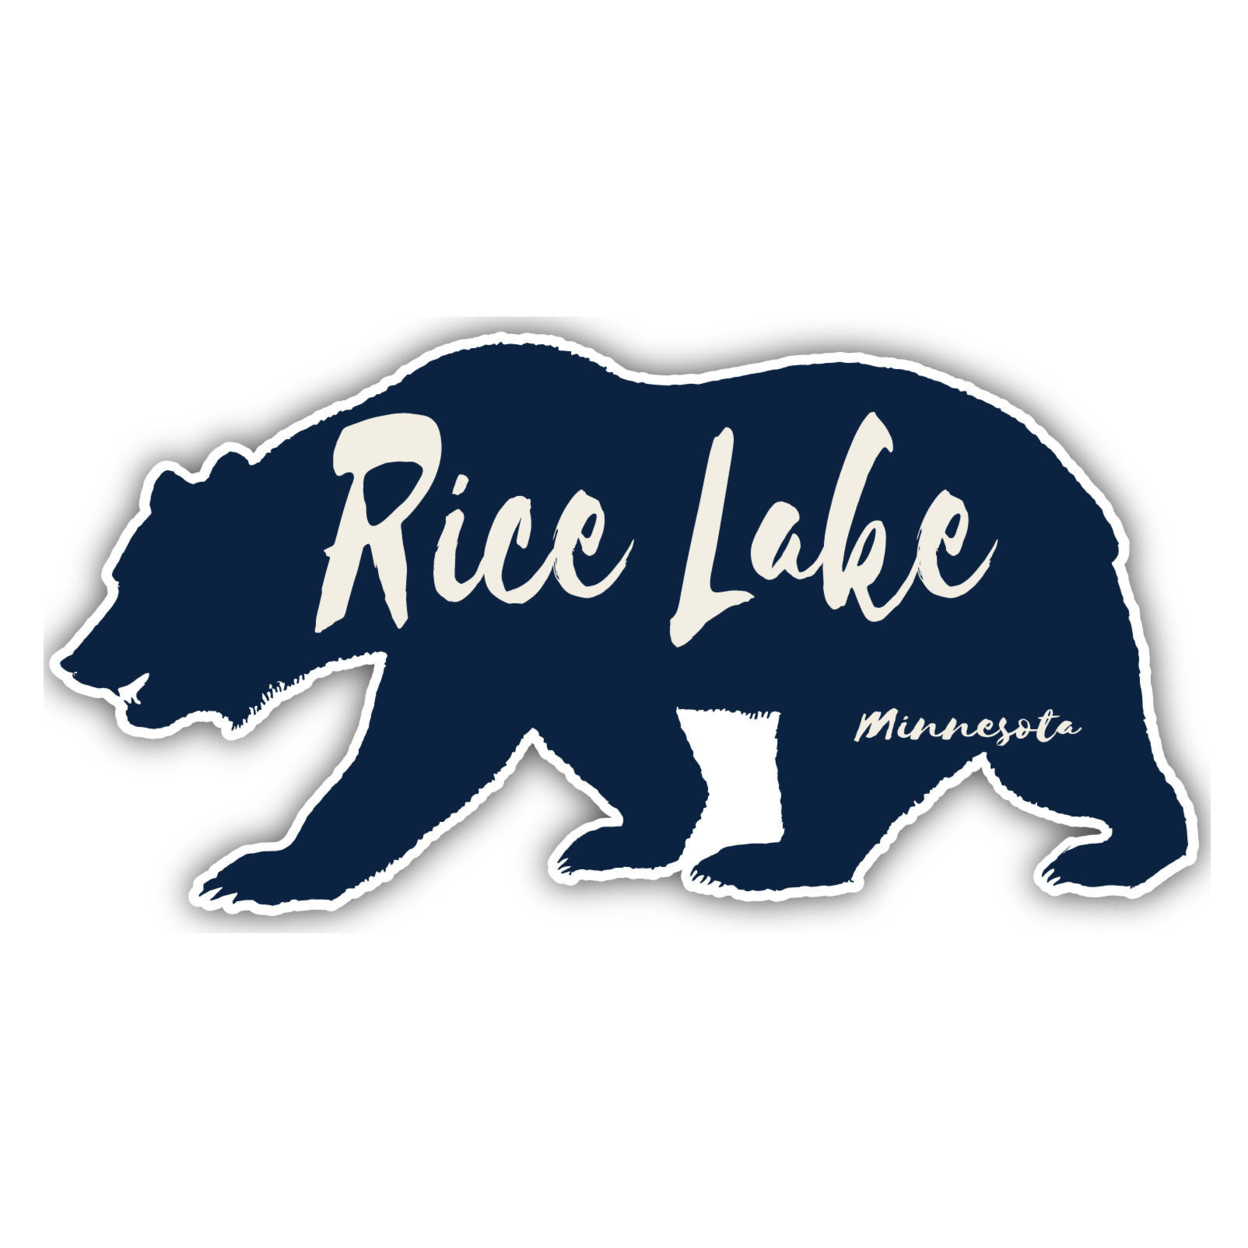 Rice Lake Minnesota Souvenir Decorative Stickers (Choose Theme And Size) - Single Unit, 4-Inch, Bear